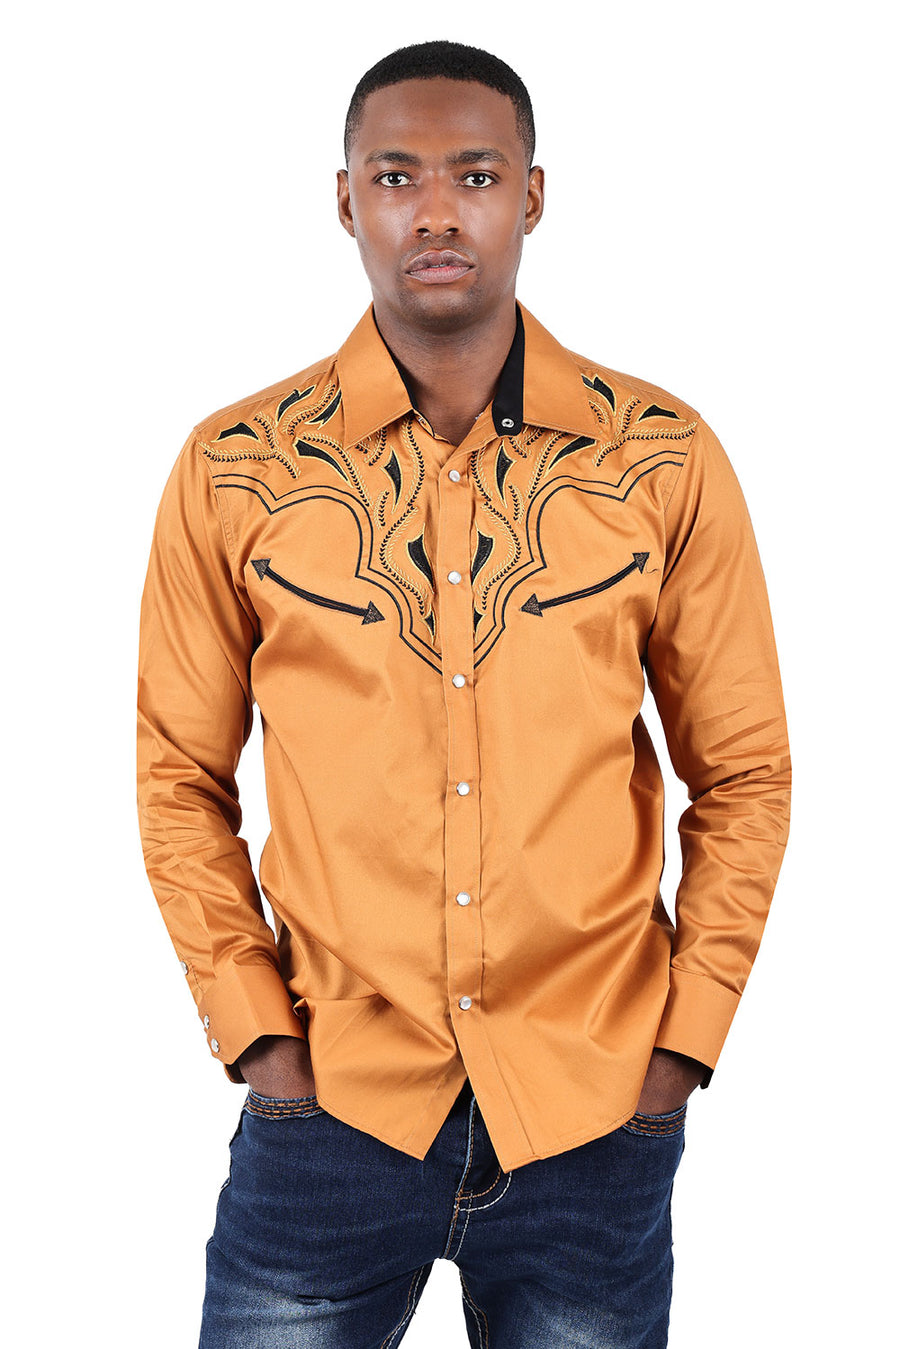 Barabas OCCIDENTAL ARROWS Tan Western Shirt - Dudes Boutique